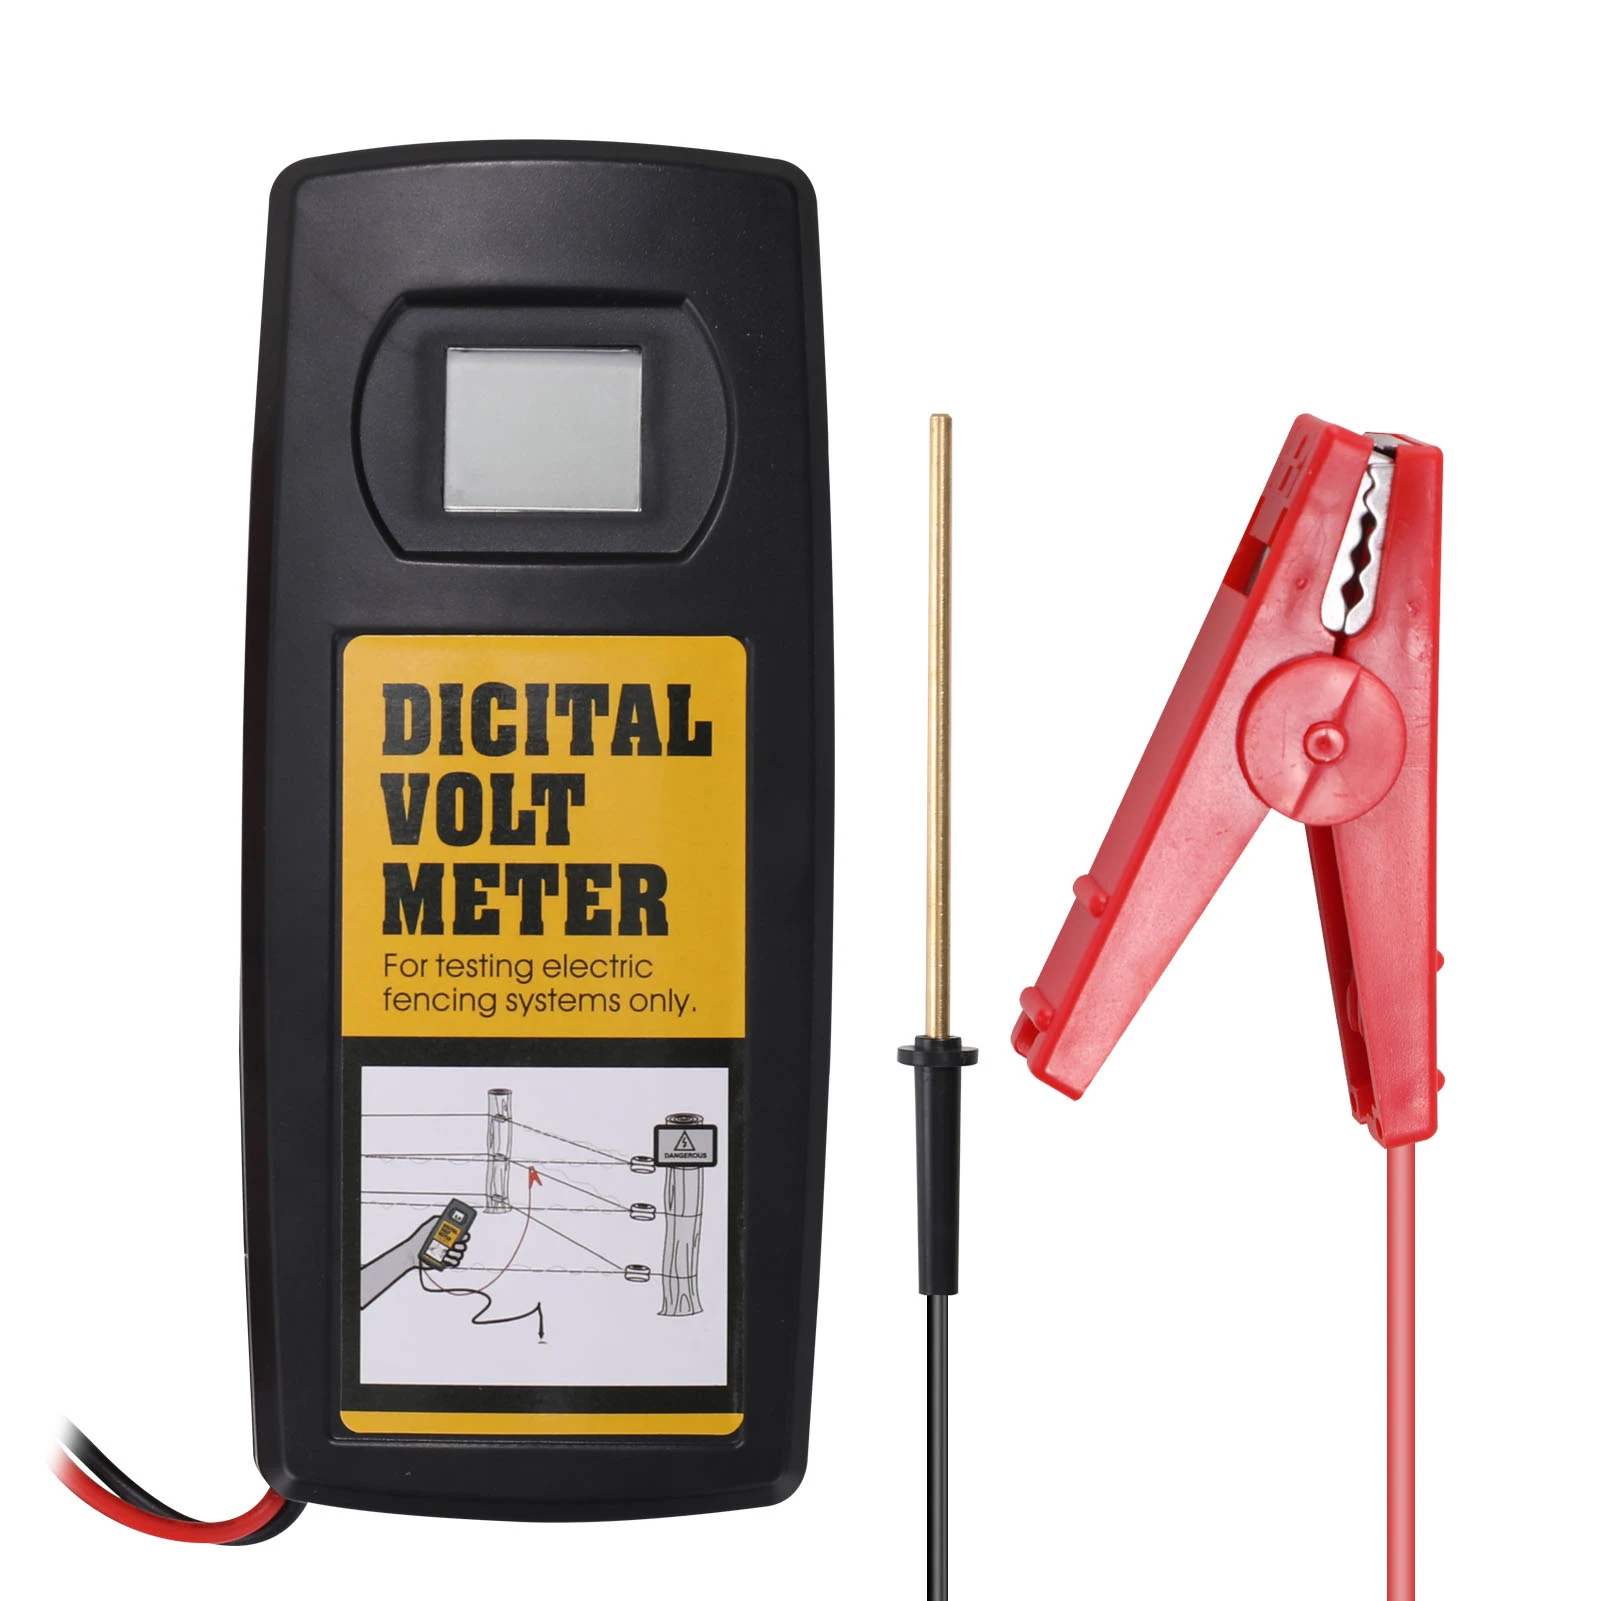 tape measure toolstation 9.9KV Digital Fence Tester Home Garden Horse Livestock Electric Fence Voltmeter LCD Display with Backlight sound measure